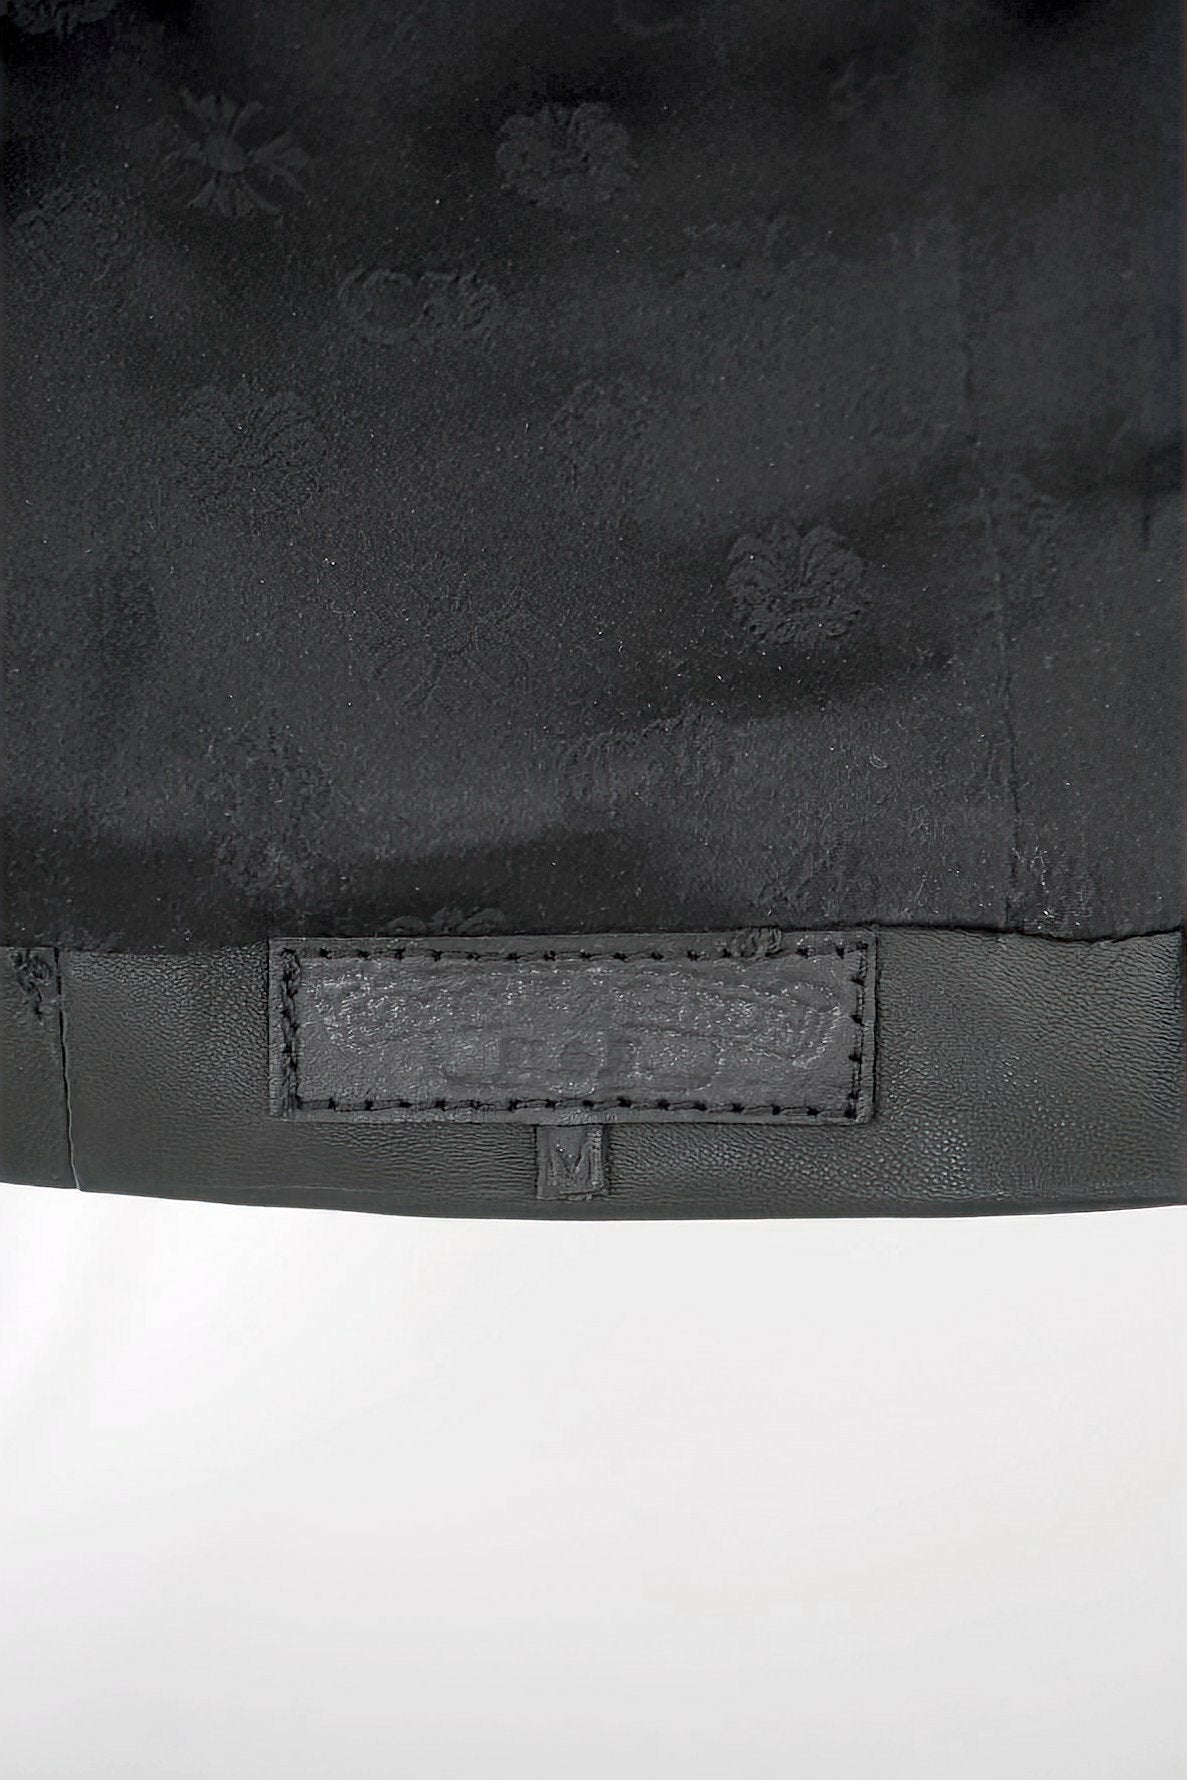 Chrome Hearts Black Leather Vest - Foxy Couture Carmel